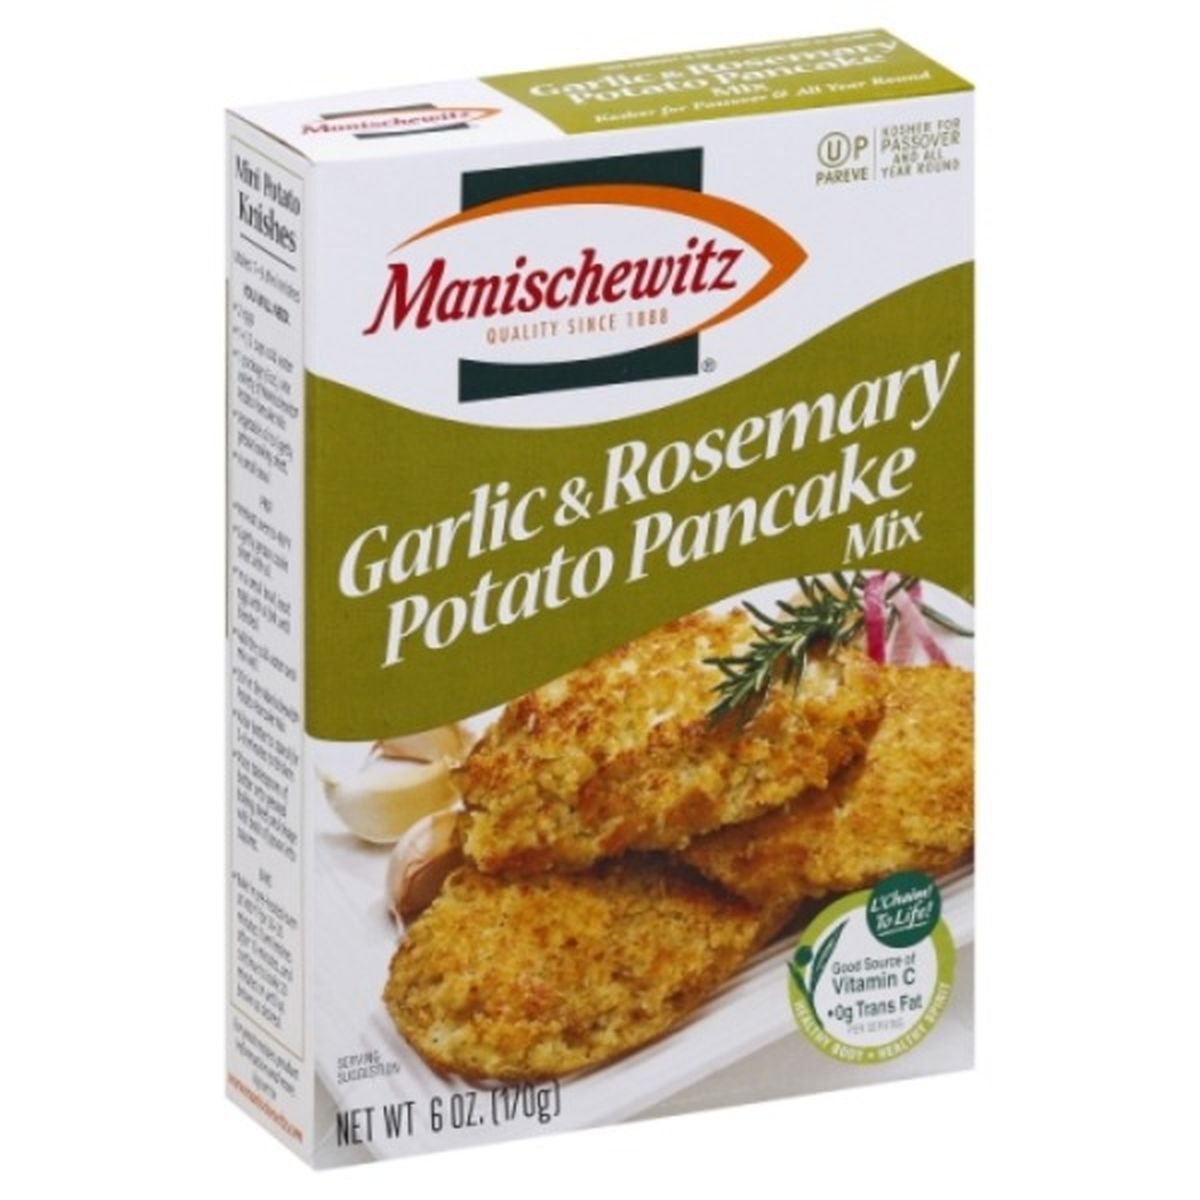 Calories in Manischewitz Pancake Mix, Potato, Garlic & Rosemary